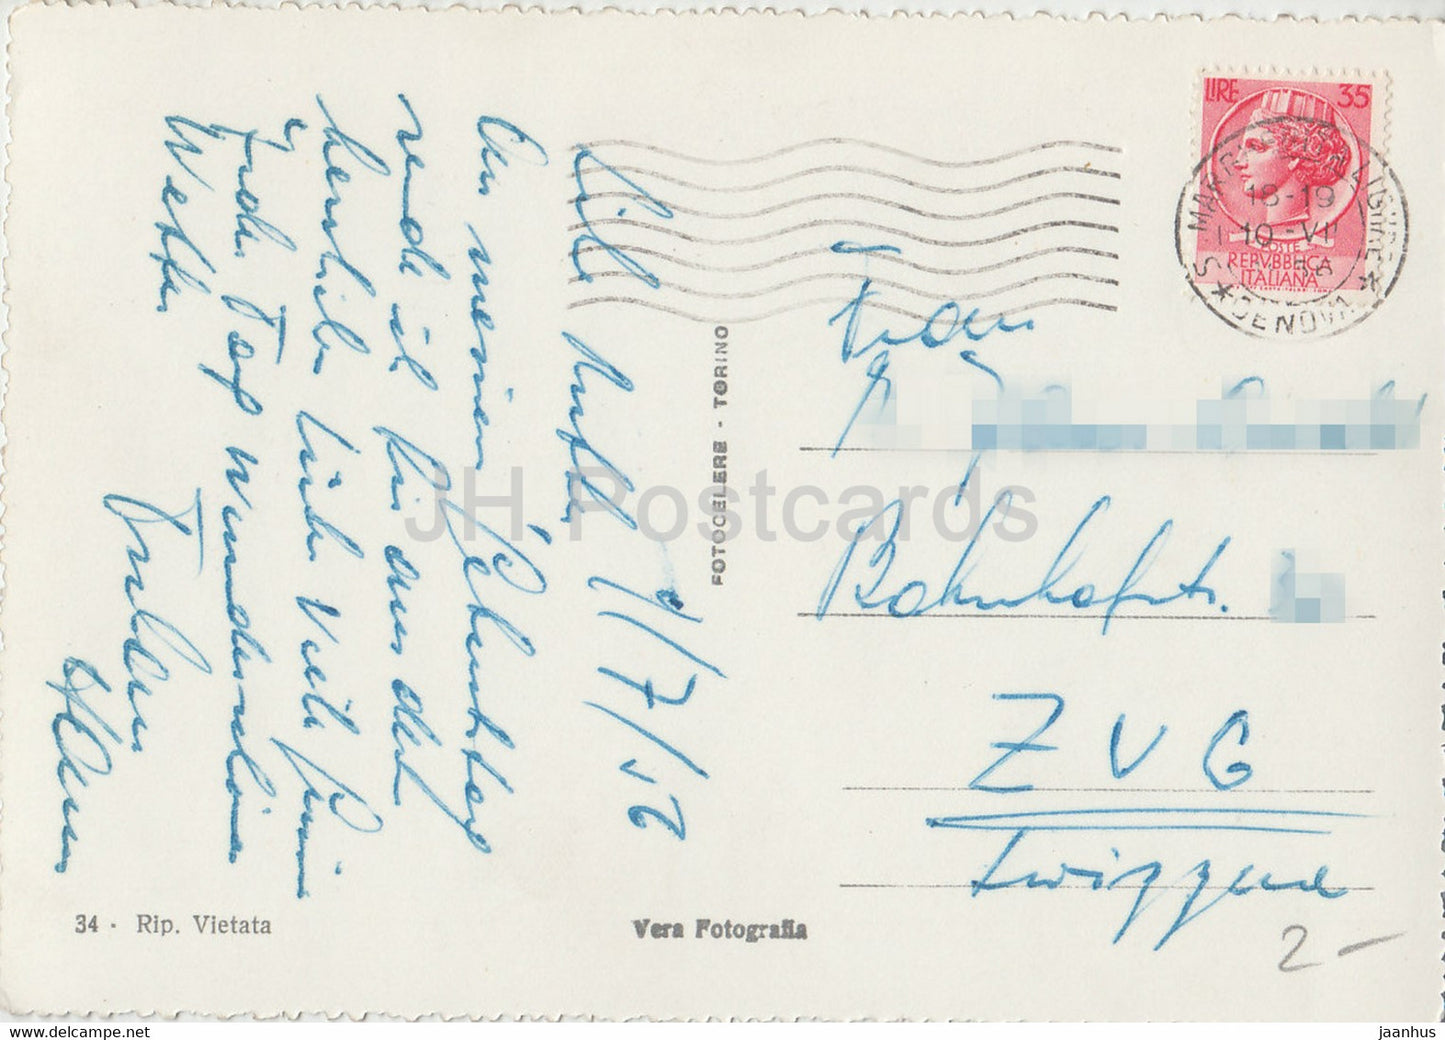 S Margherita - Castello di Paraggi - Schloss - alte Postkarte - 1956 - Italien - gebraucht